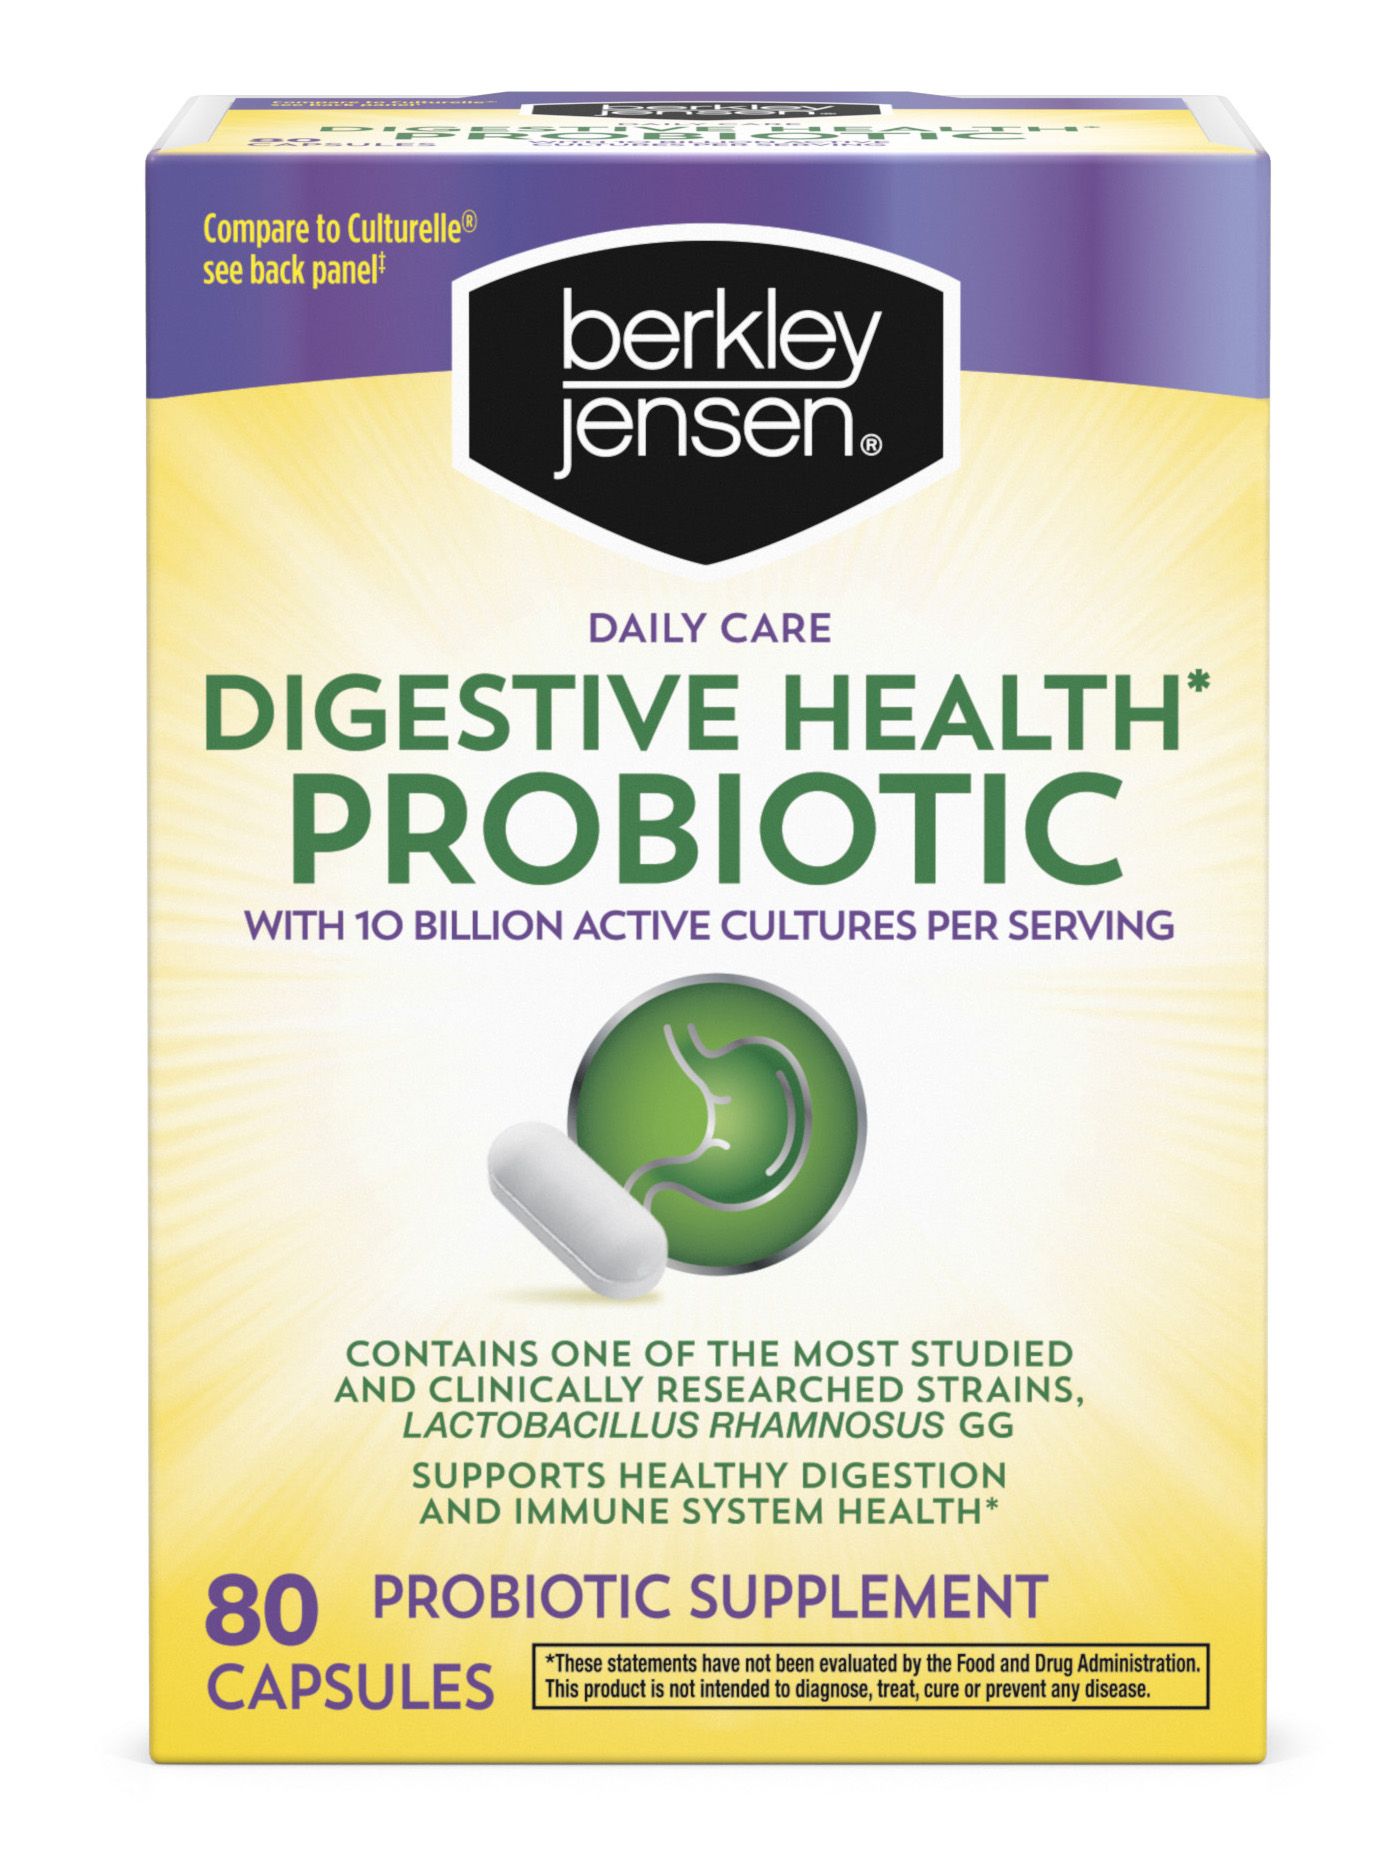 Berkley Jensen Daily Care Digestive Health Probiotic Supplement Capsules, 80 ct.